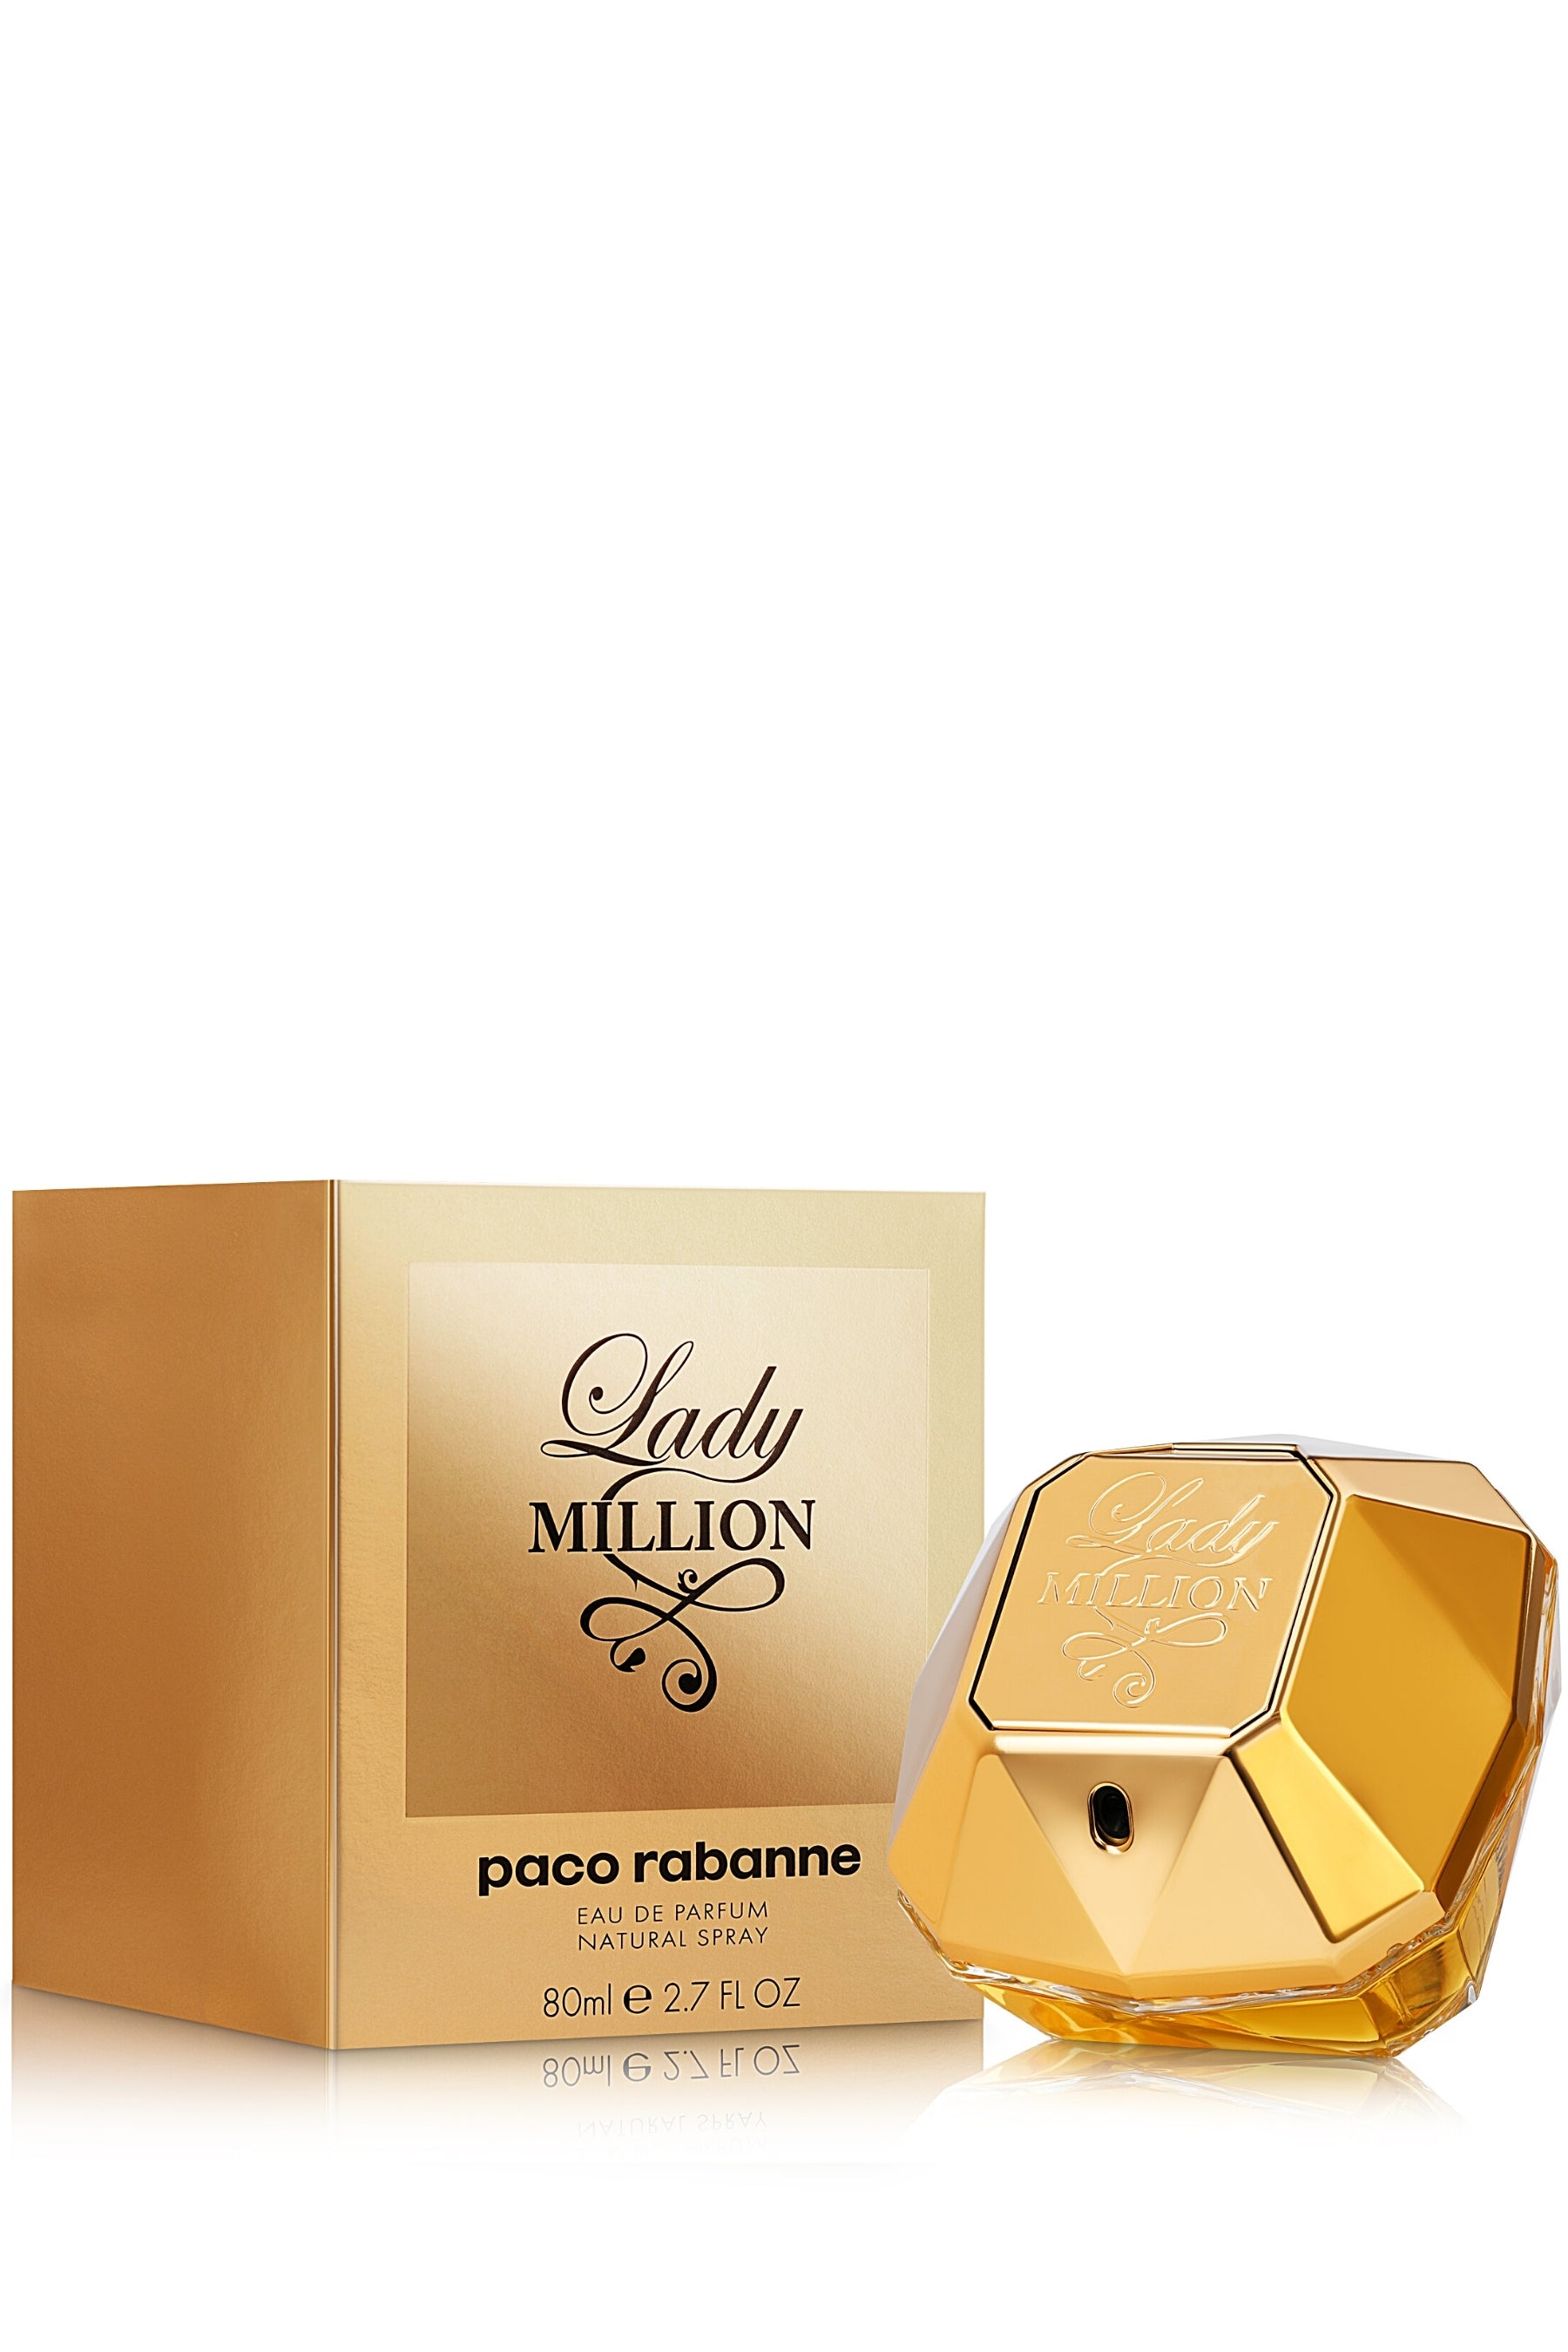 Lady Million Paco Rabanne | REBL Scents